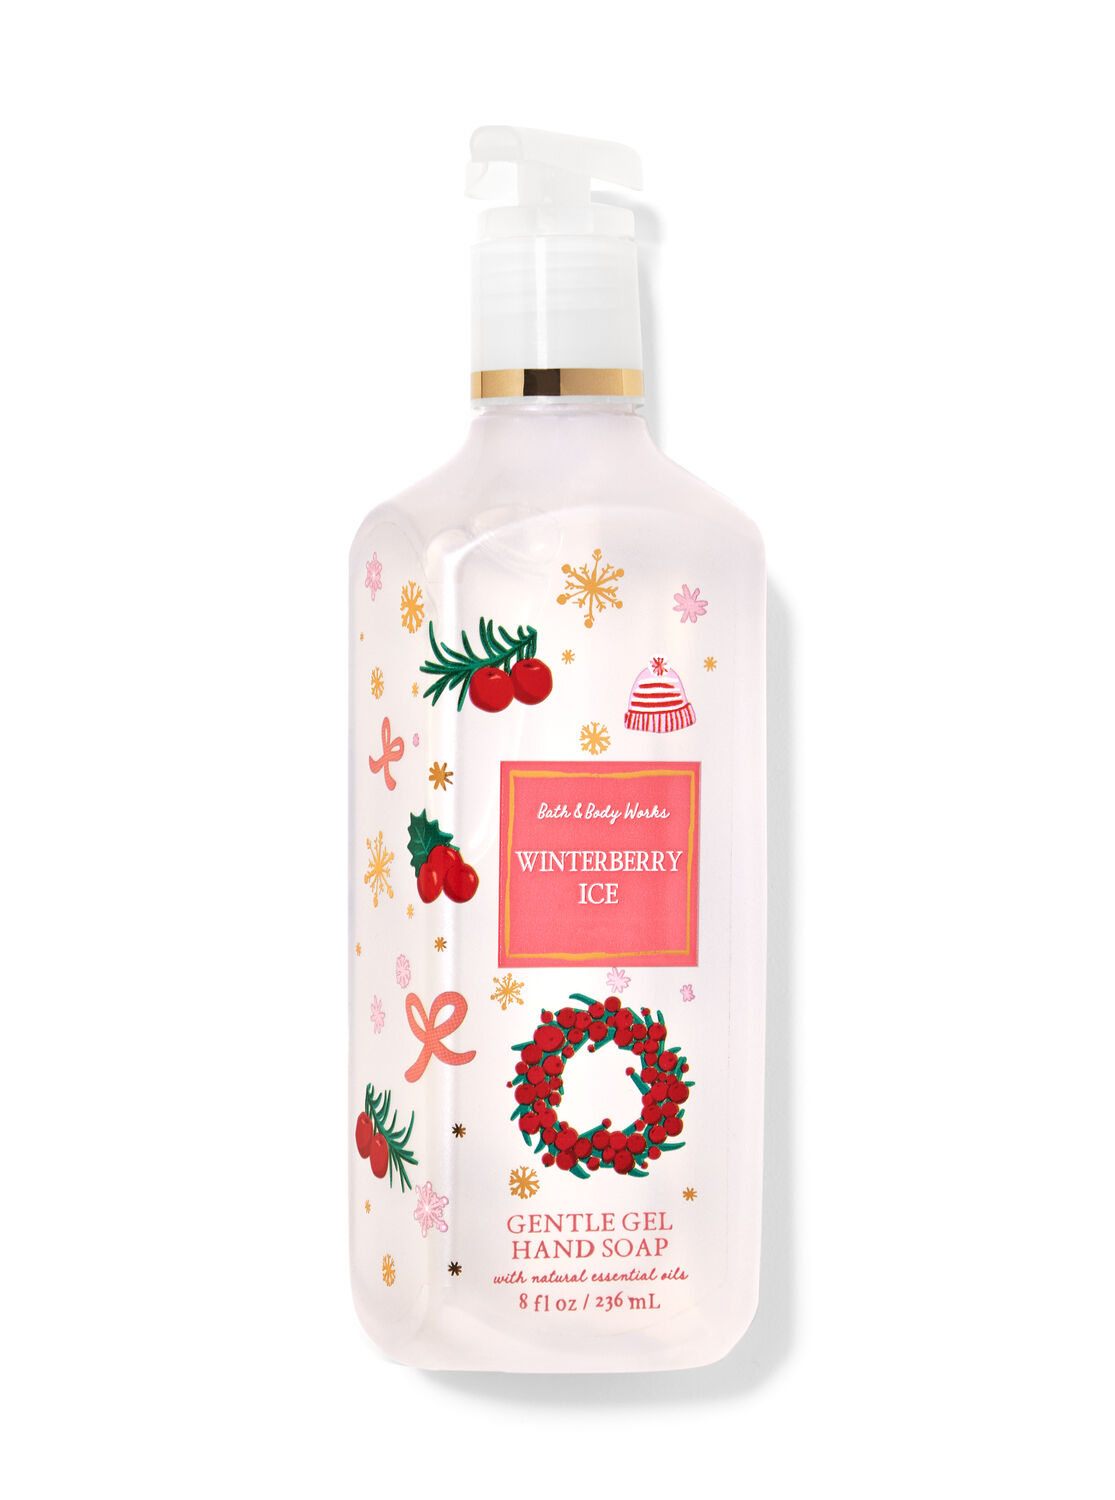 Winterberry Ice Gentle Gel Hand Soap